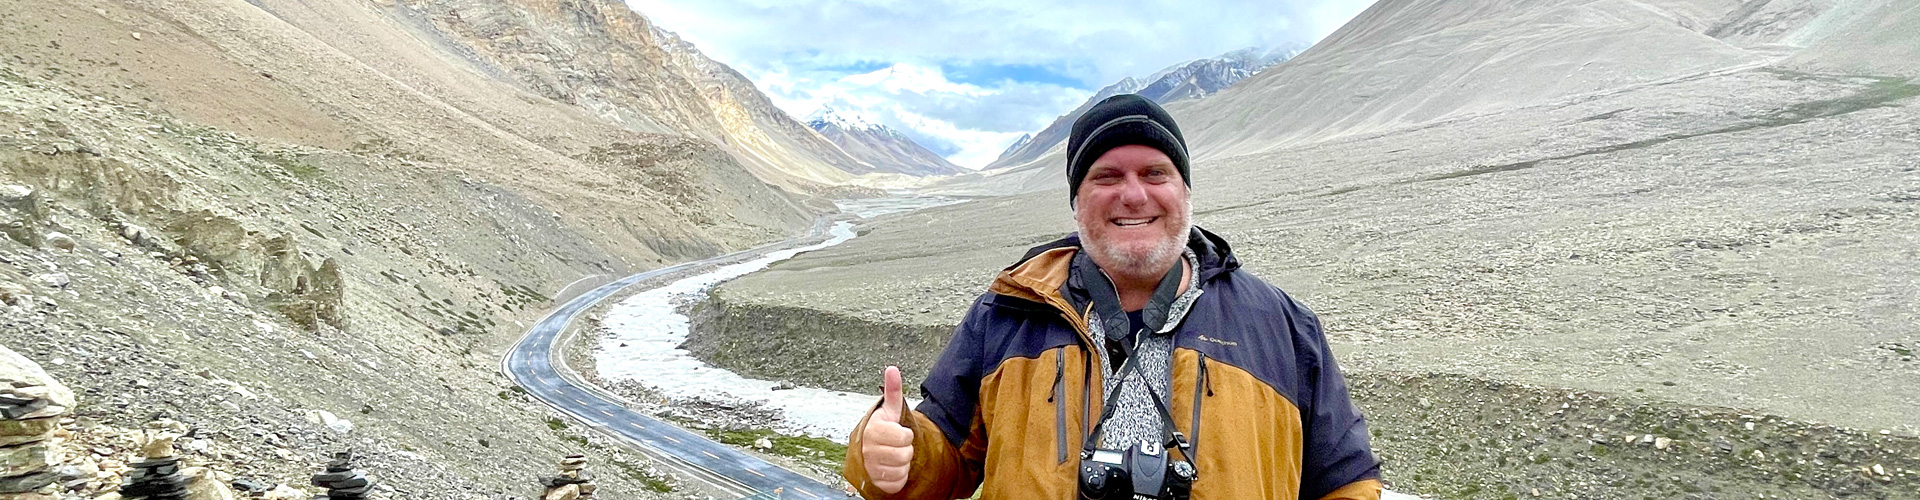 14 Days Traverse Himalayas from India, Nepal to Tibet 